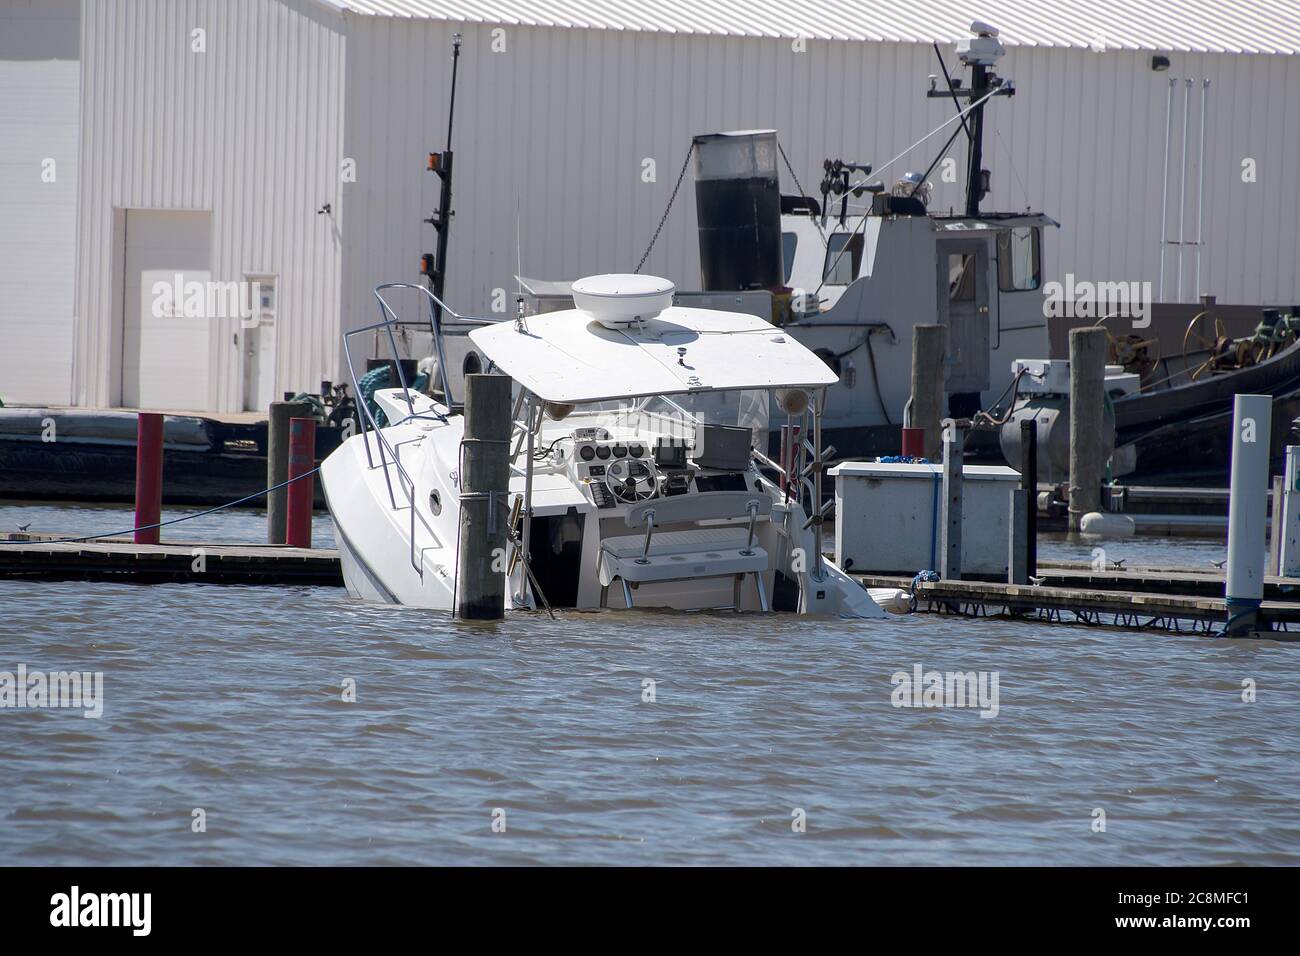 white power boat sinking in marina slip Stock Photo